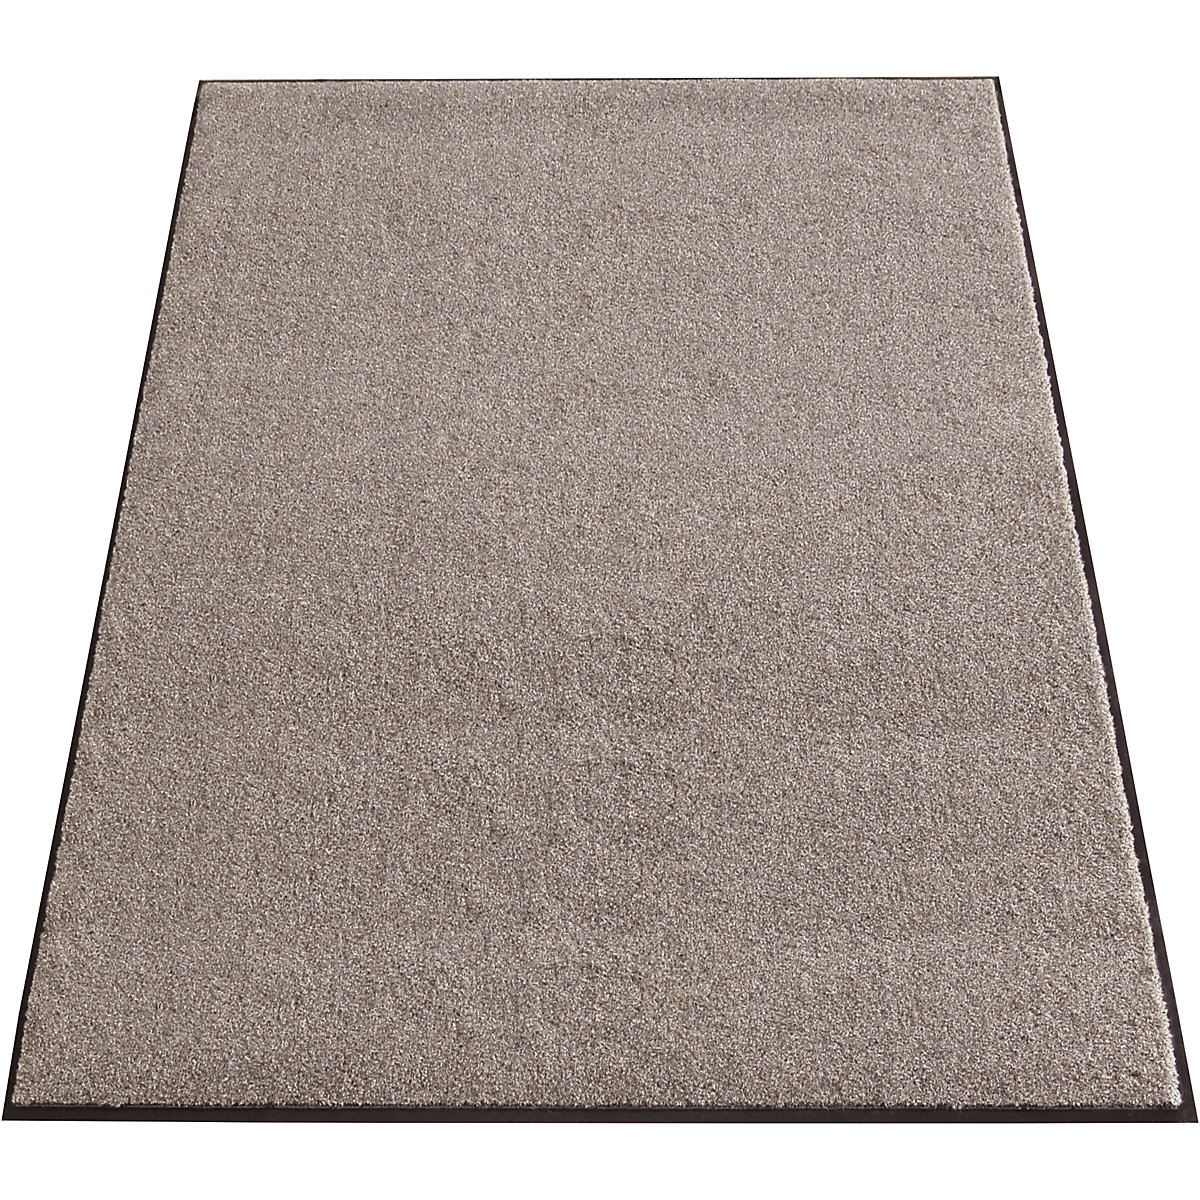 EAZYCARE AQUA entrance matting, LxW 1800 x 1200 mm, brown